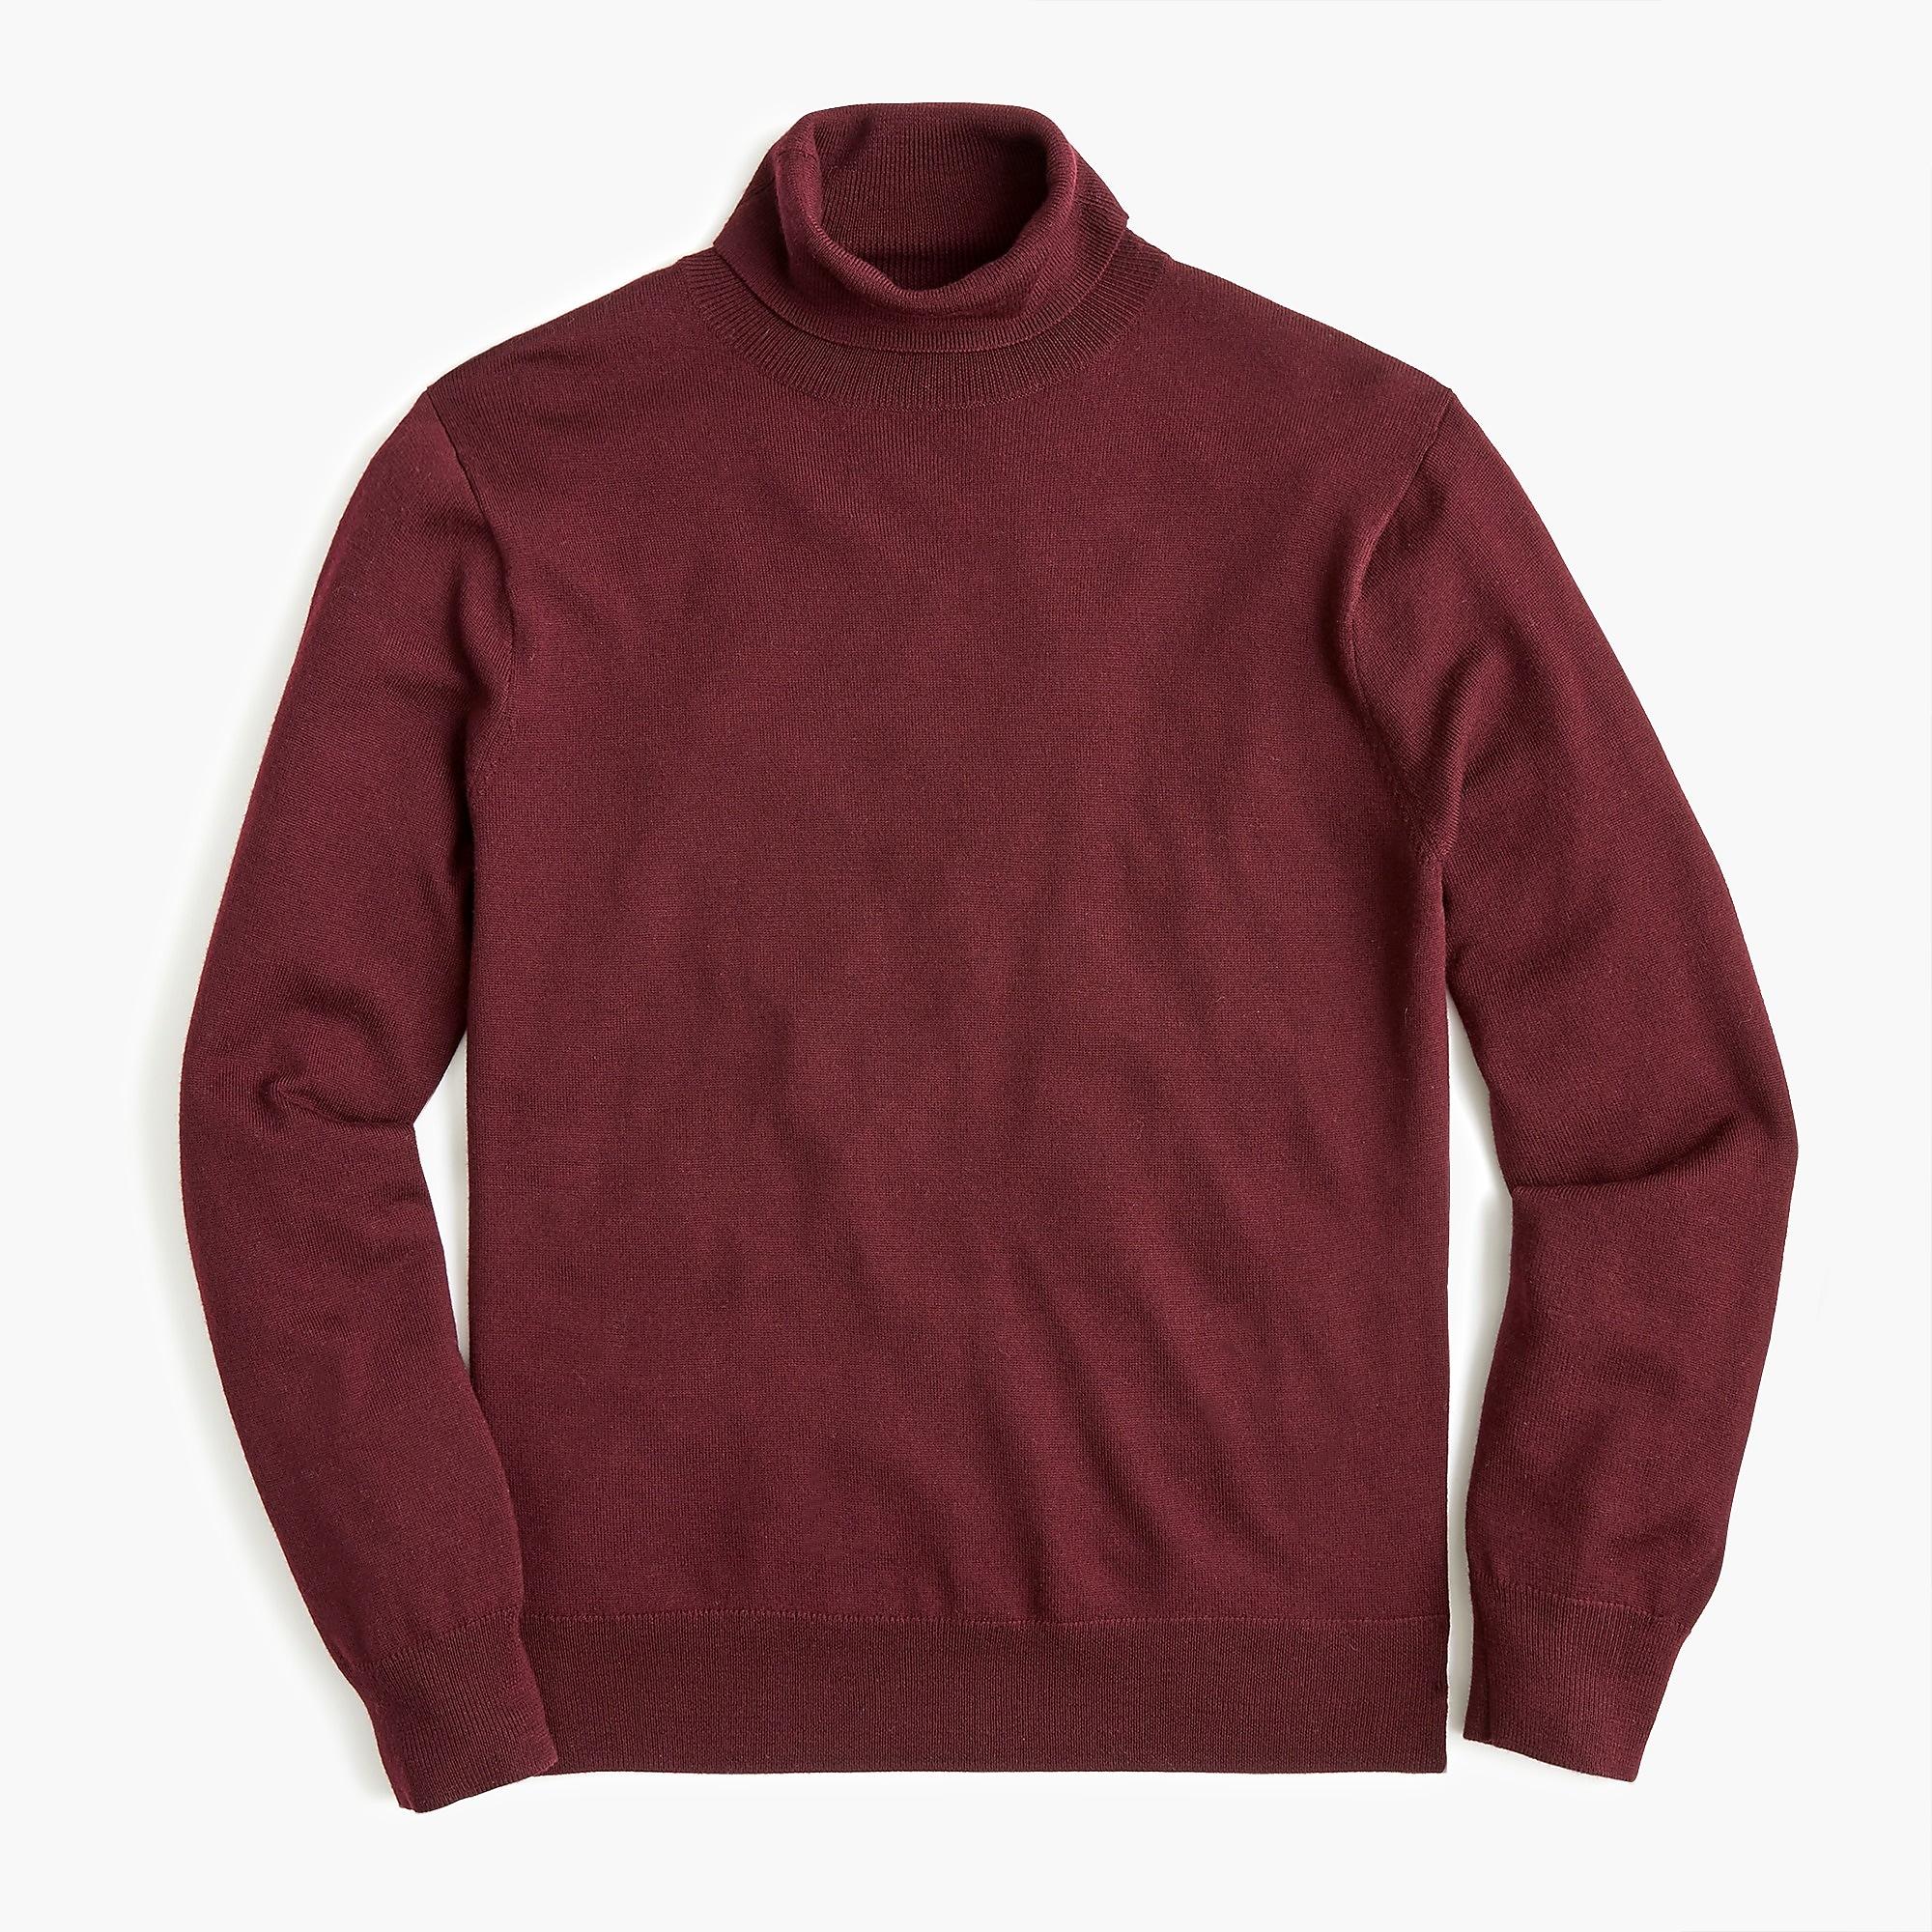 J.Crew Washable Merino Wool Turtleneck Sweater in Dark Burgundy (Red ...